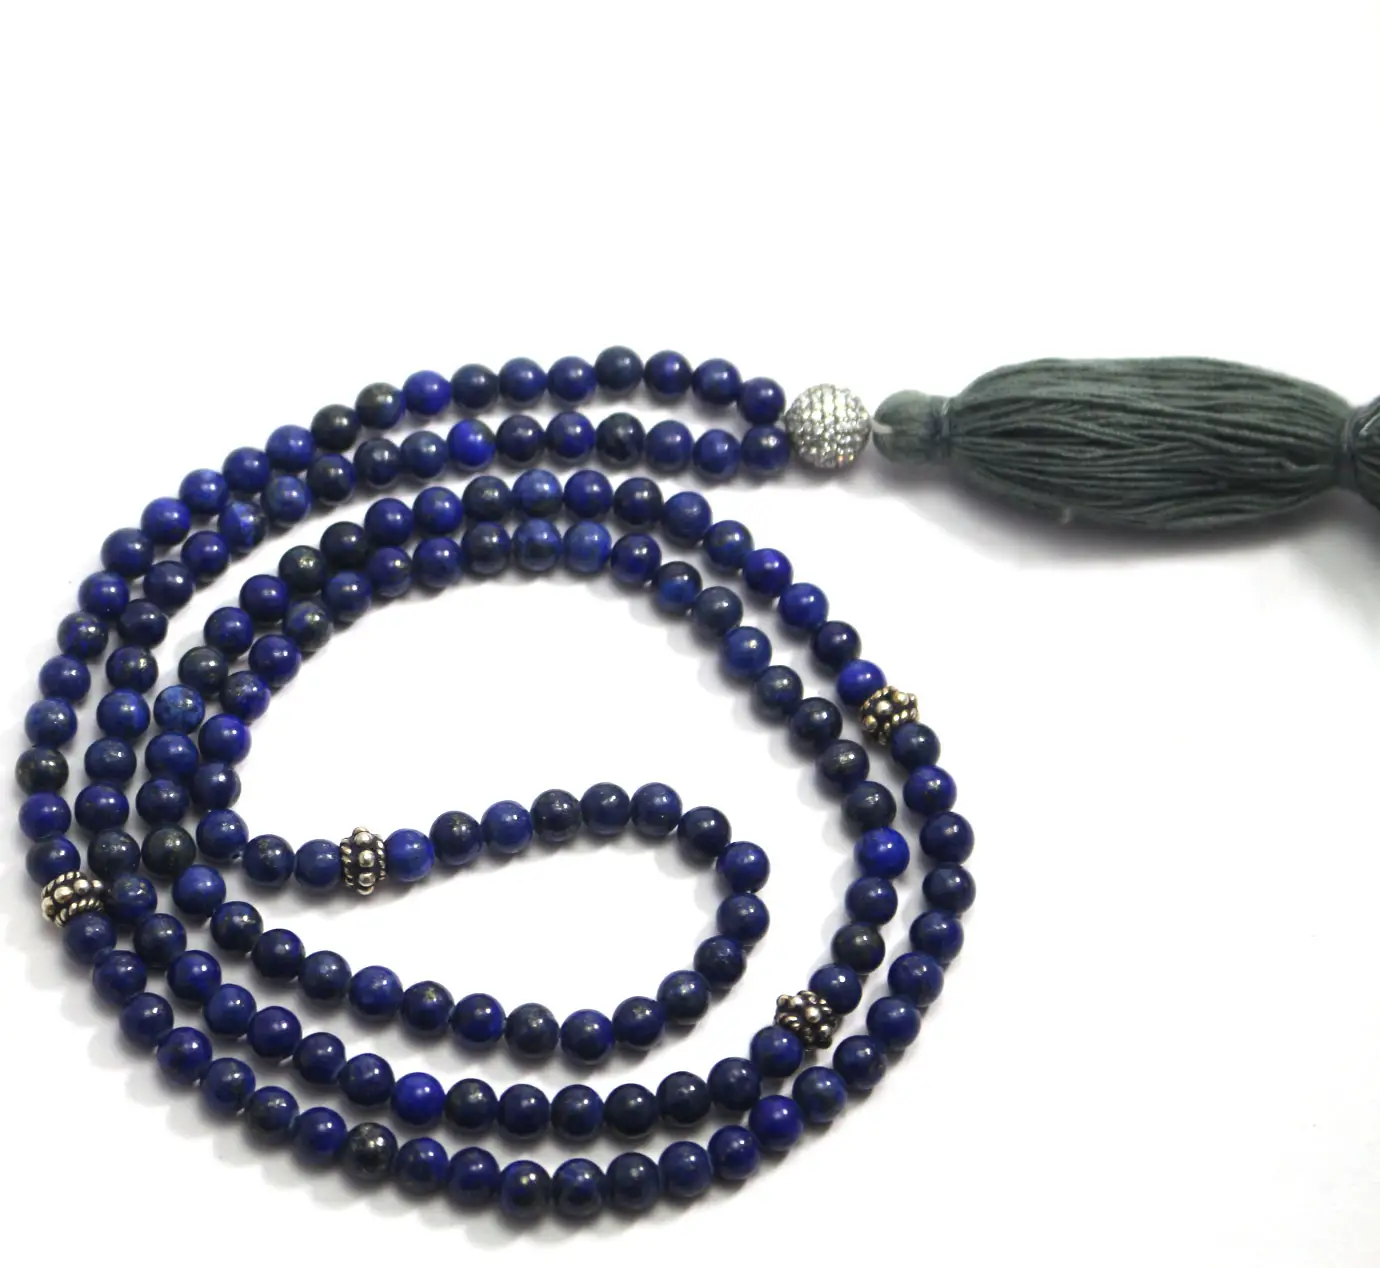 High Quality Natural Lapis Lazuli Gemstone Beads Handmade Necklace Jewelry Wholesale Factory Price